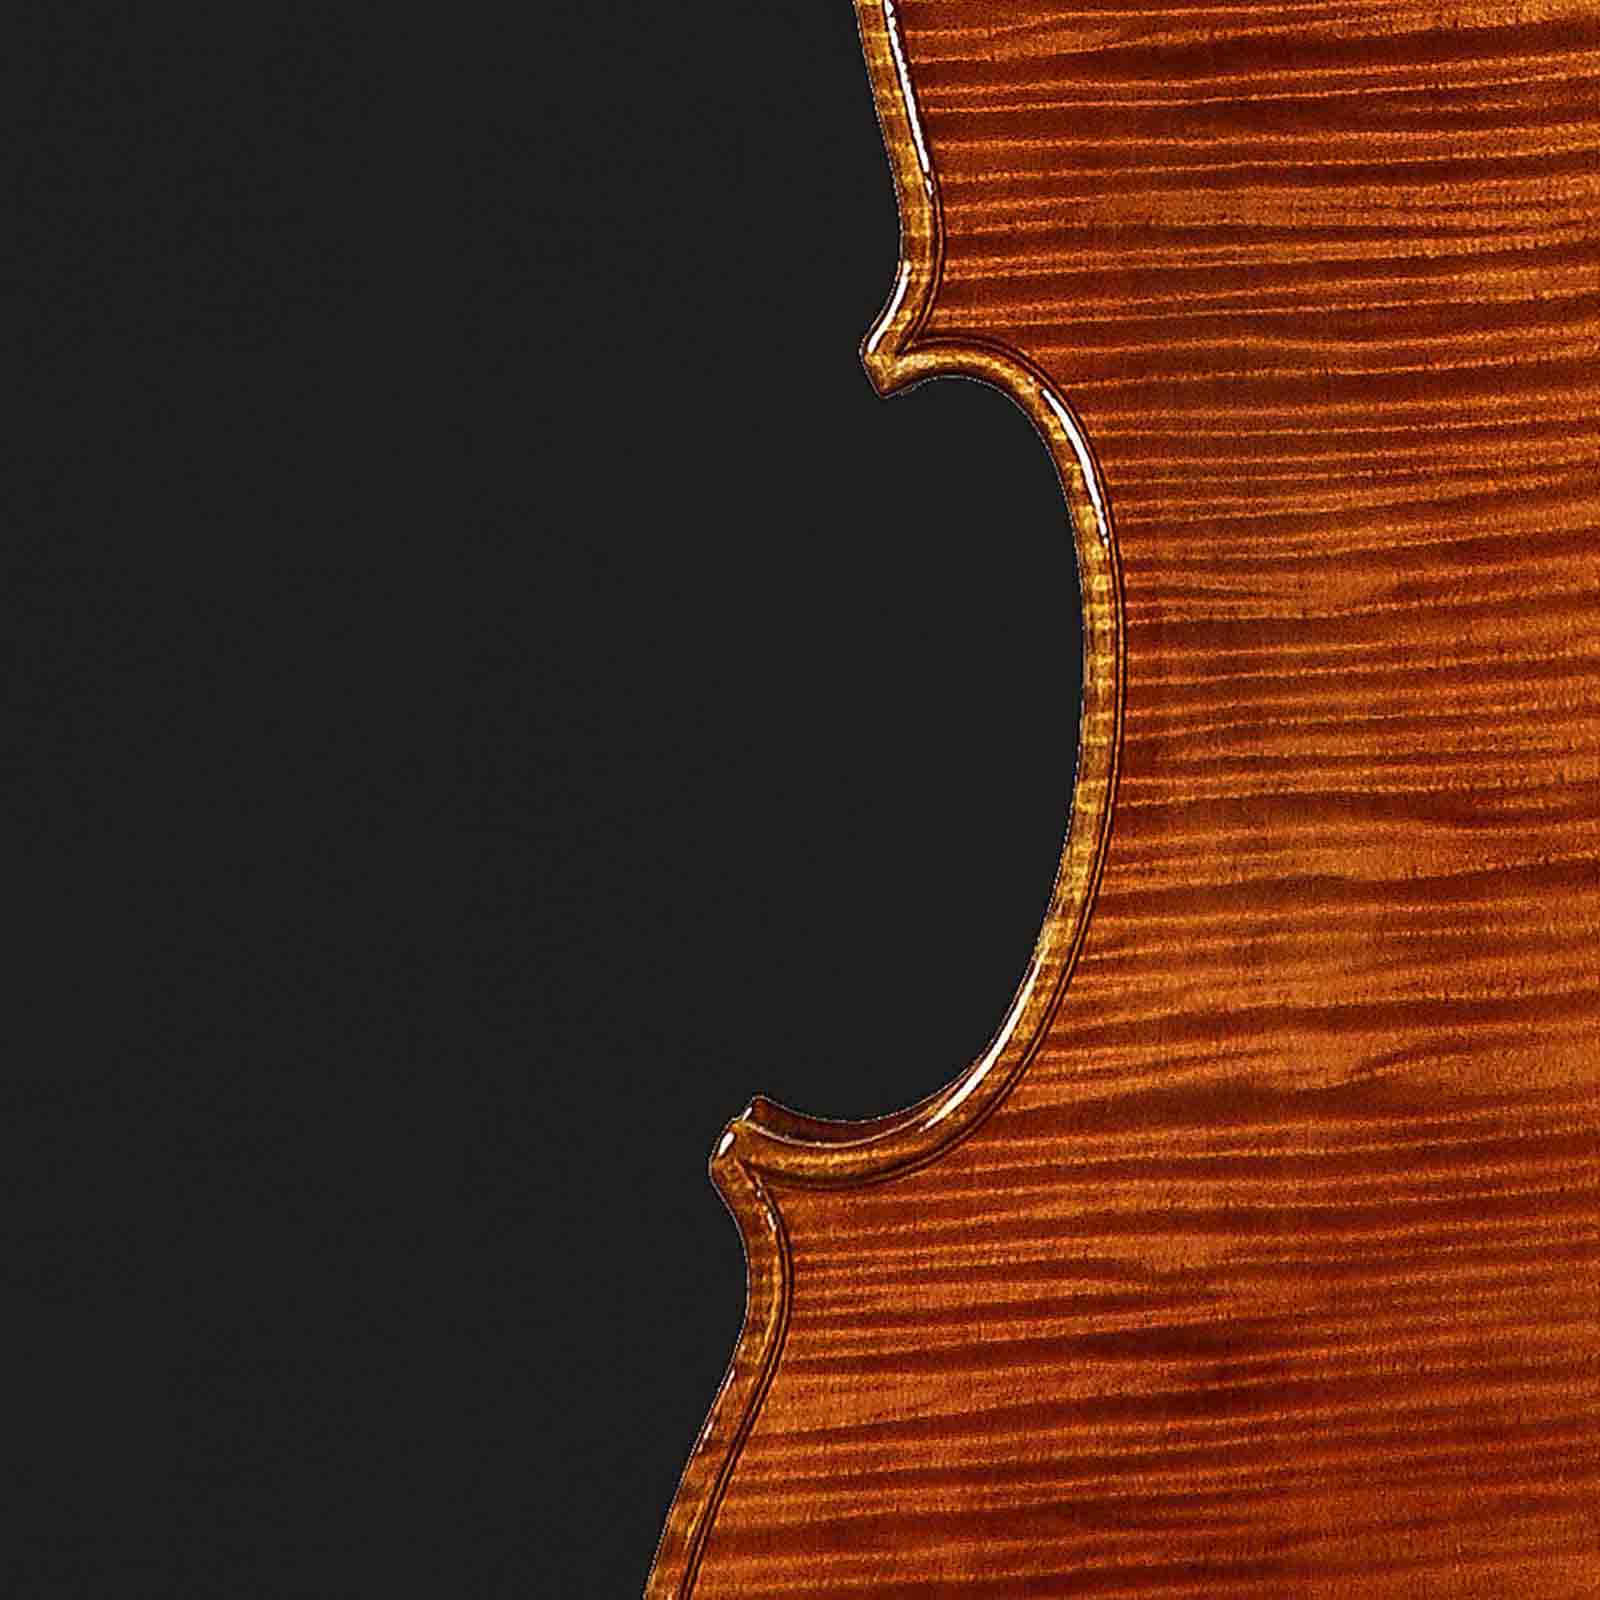 Antonio Stradivari Cremona 1690 “Tuscan“ - Image 4